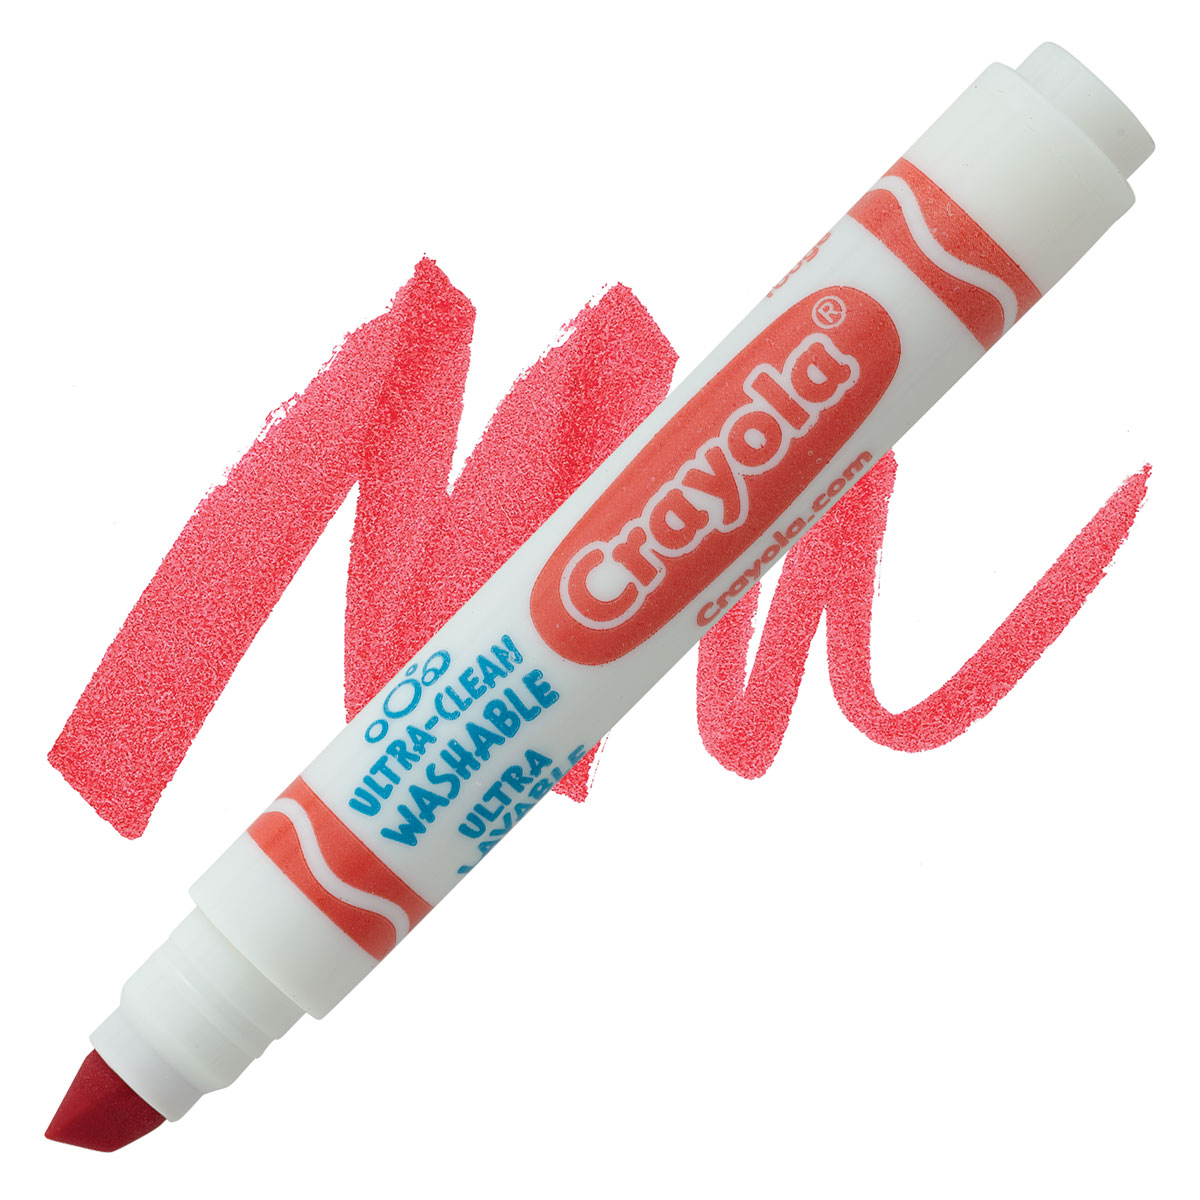 HOT Deal: Crayola 90 pc Marker Sets $8.88